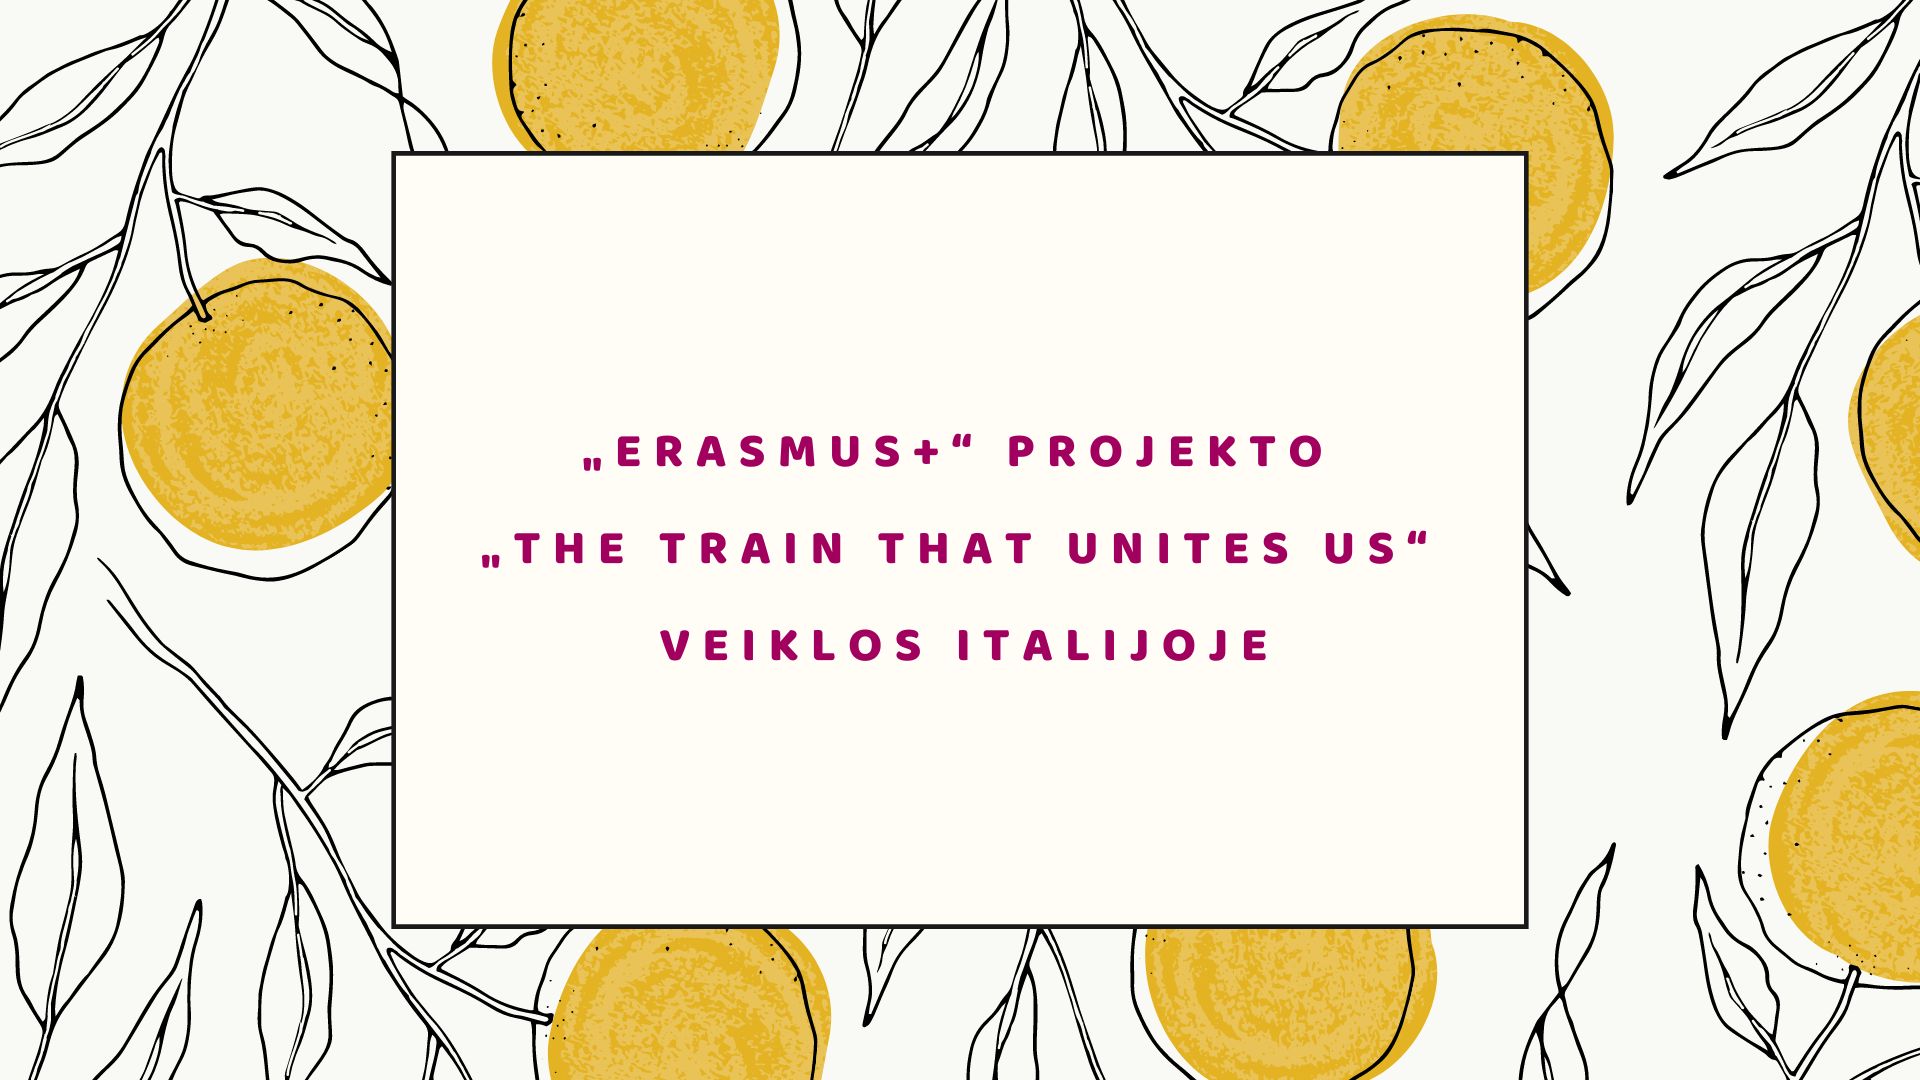 „Erasmus+“ projekto „THE TRAIN THAT UNITES US“ veiklos Italijoje